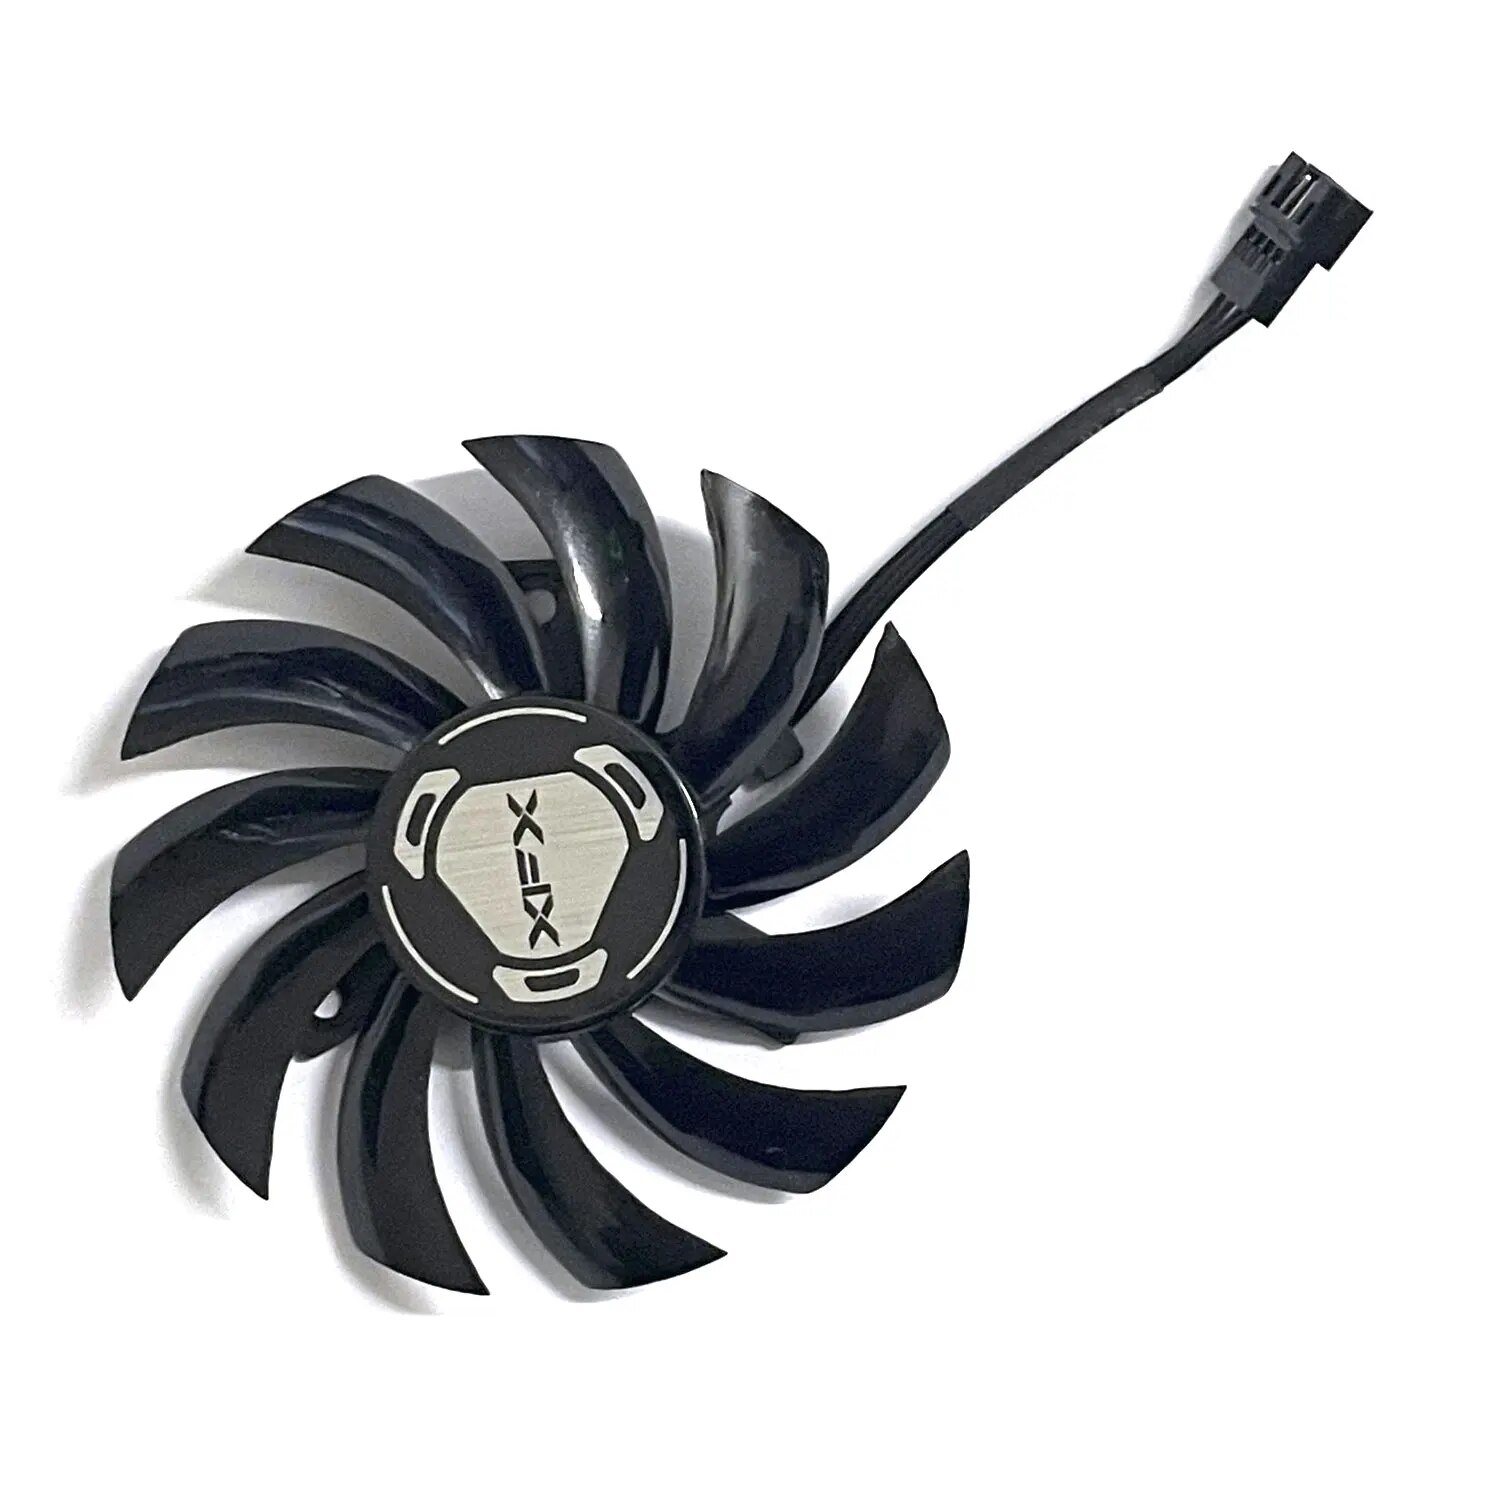 New 3fan 4pin 75mm Xfx Rx 8g Xfx Graphics 590 For Fan Cooling Gpu Fan